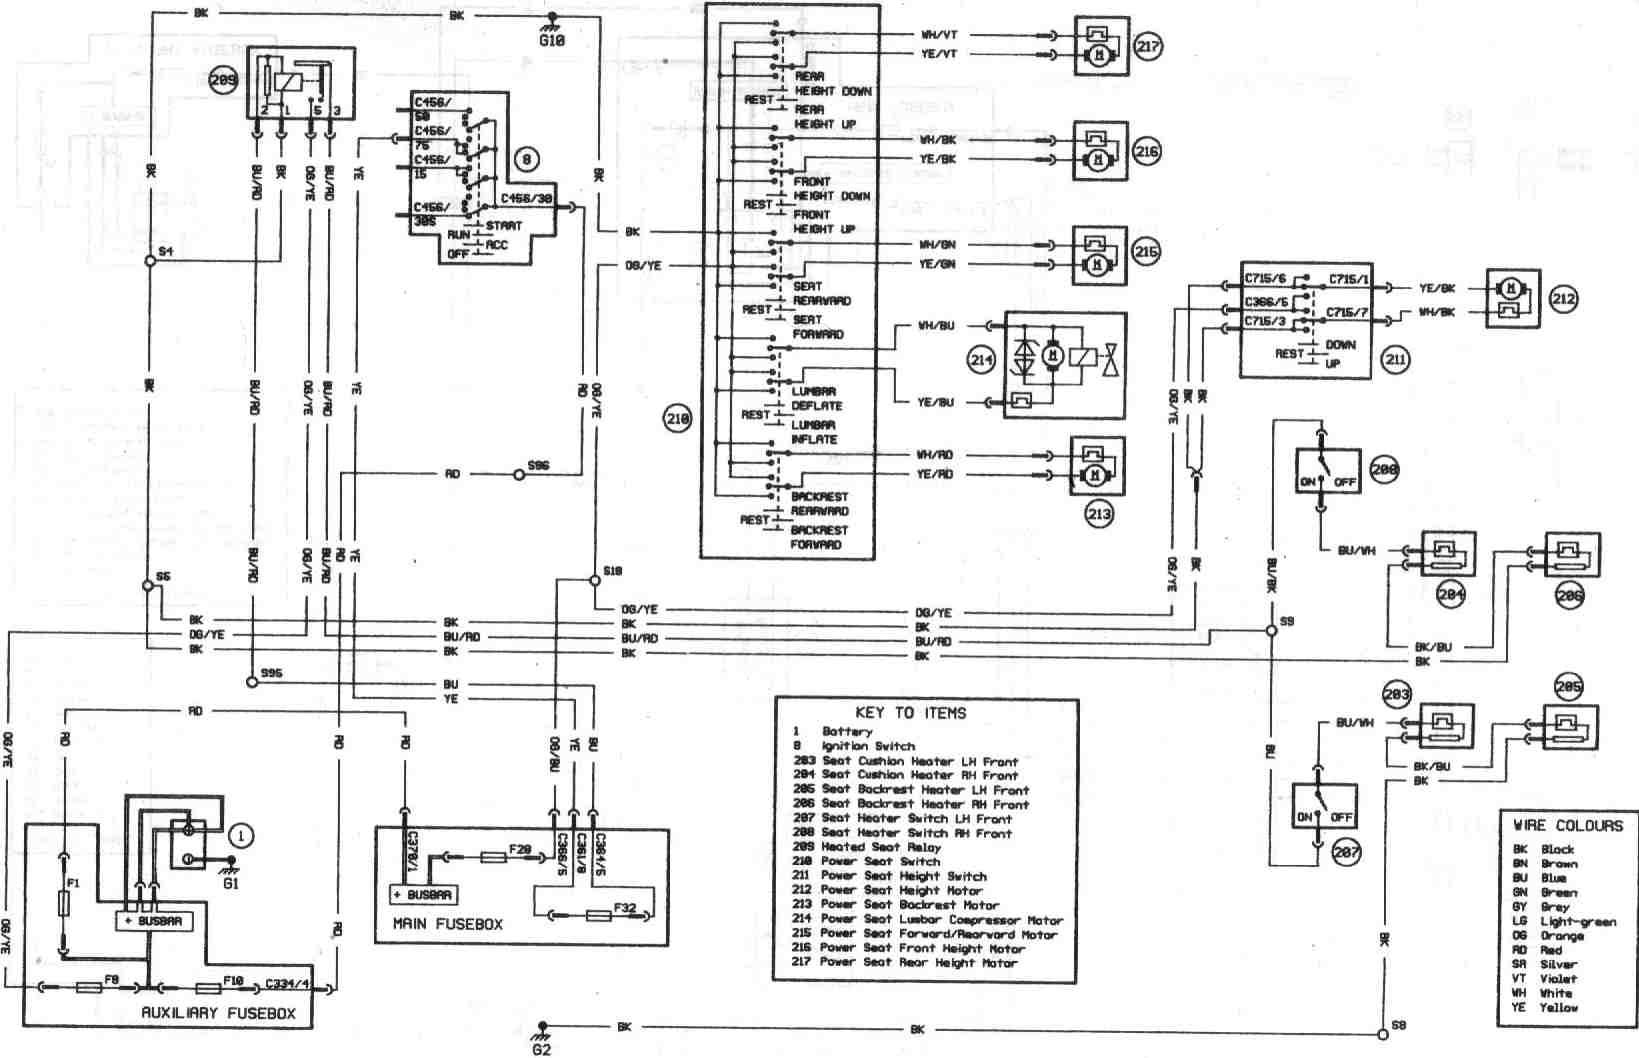 Ford mondeo mk2 radio wiring diagram #4